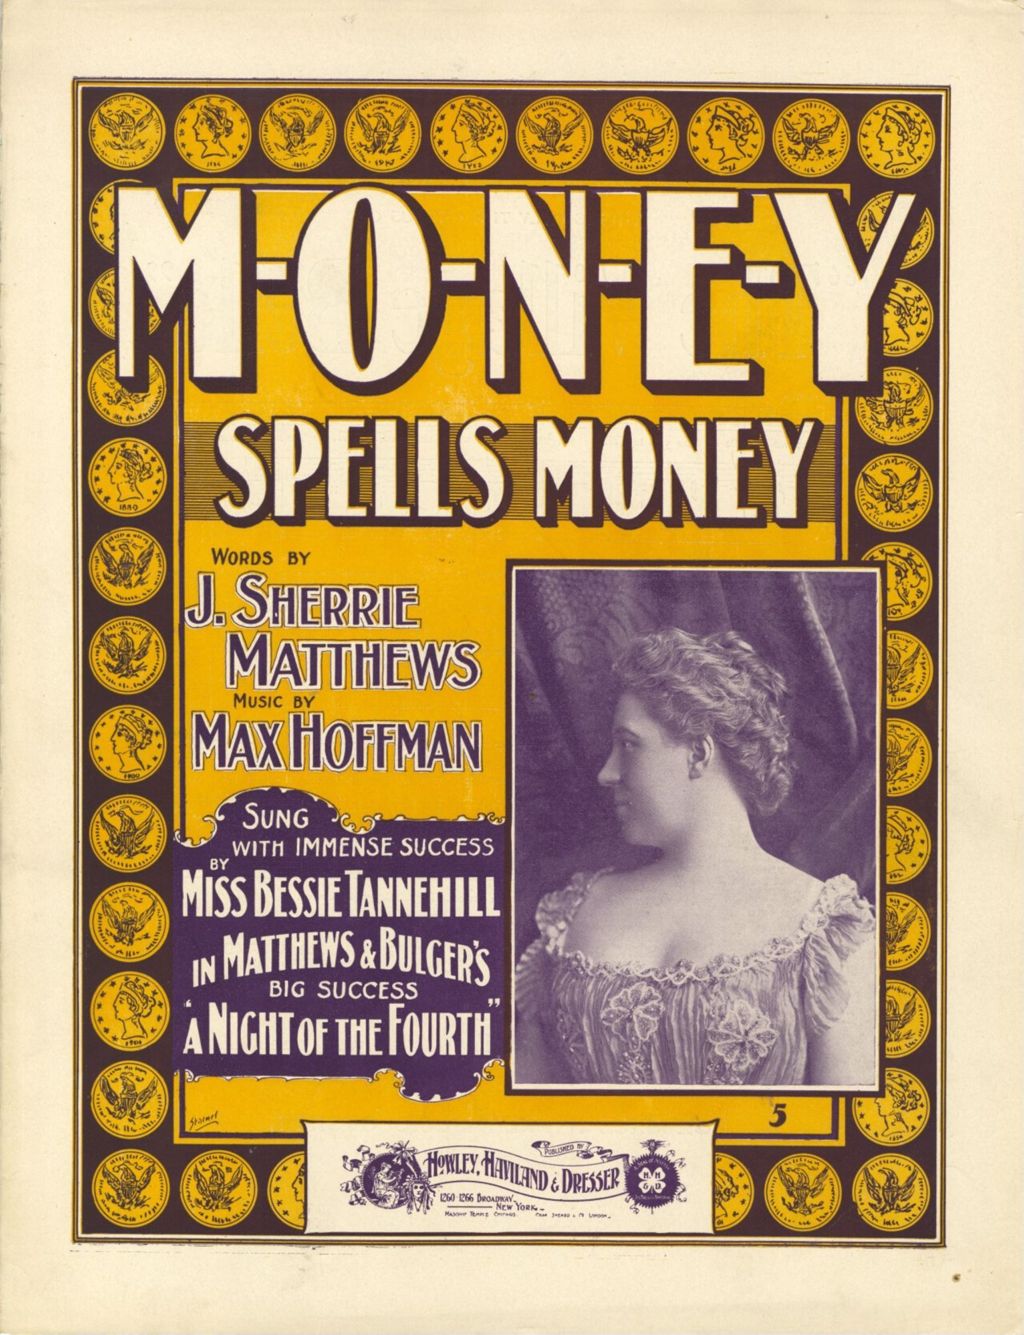 Miniature of M-O-N-E-Y Spells Money